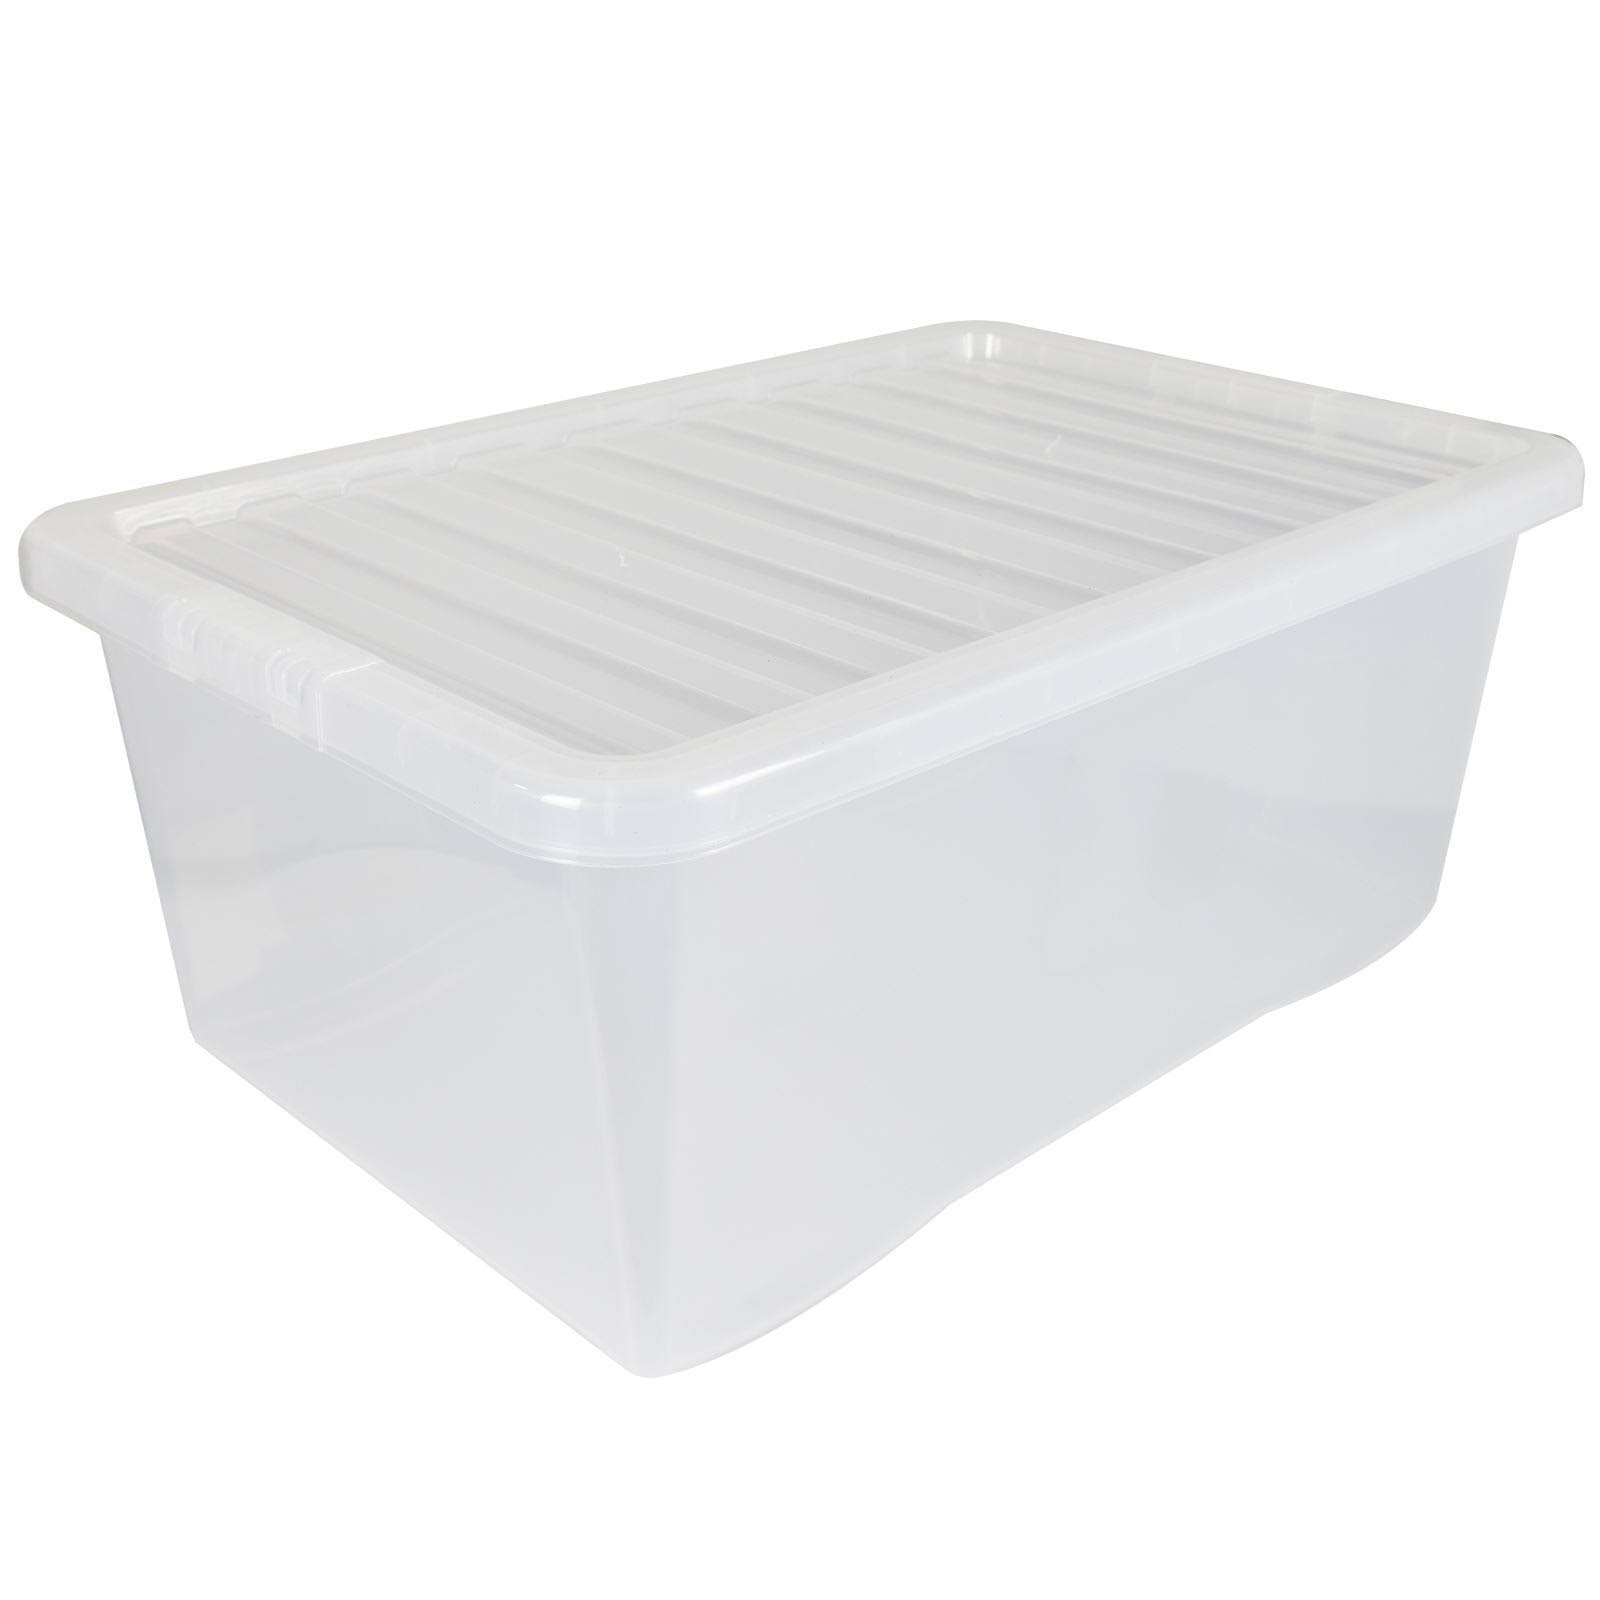 Plastic Storage Box with Lid - 45L, Clear